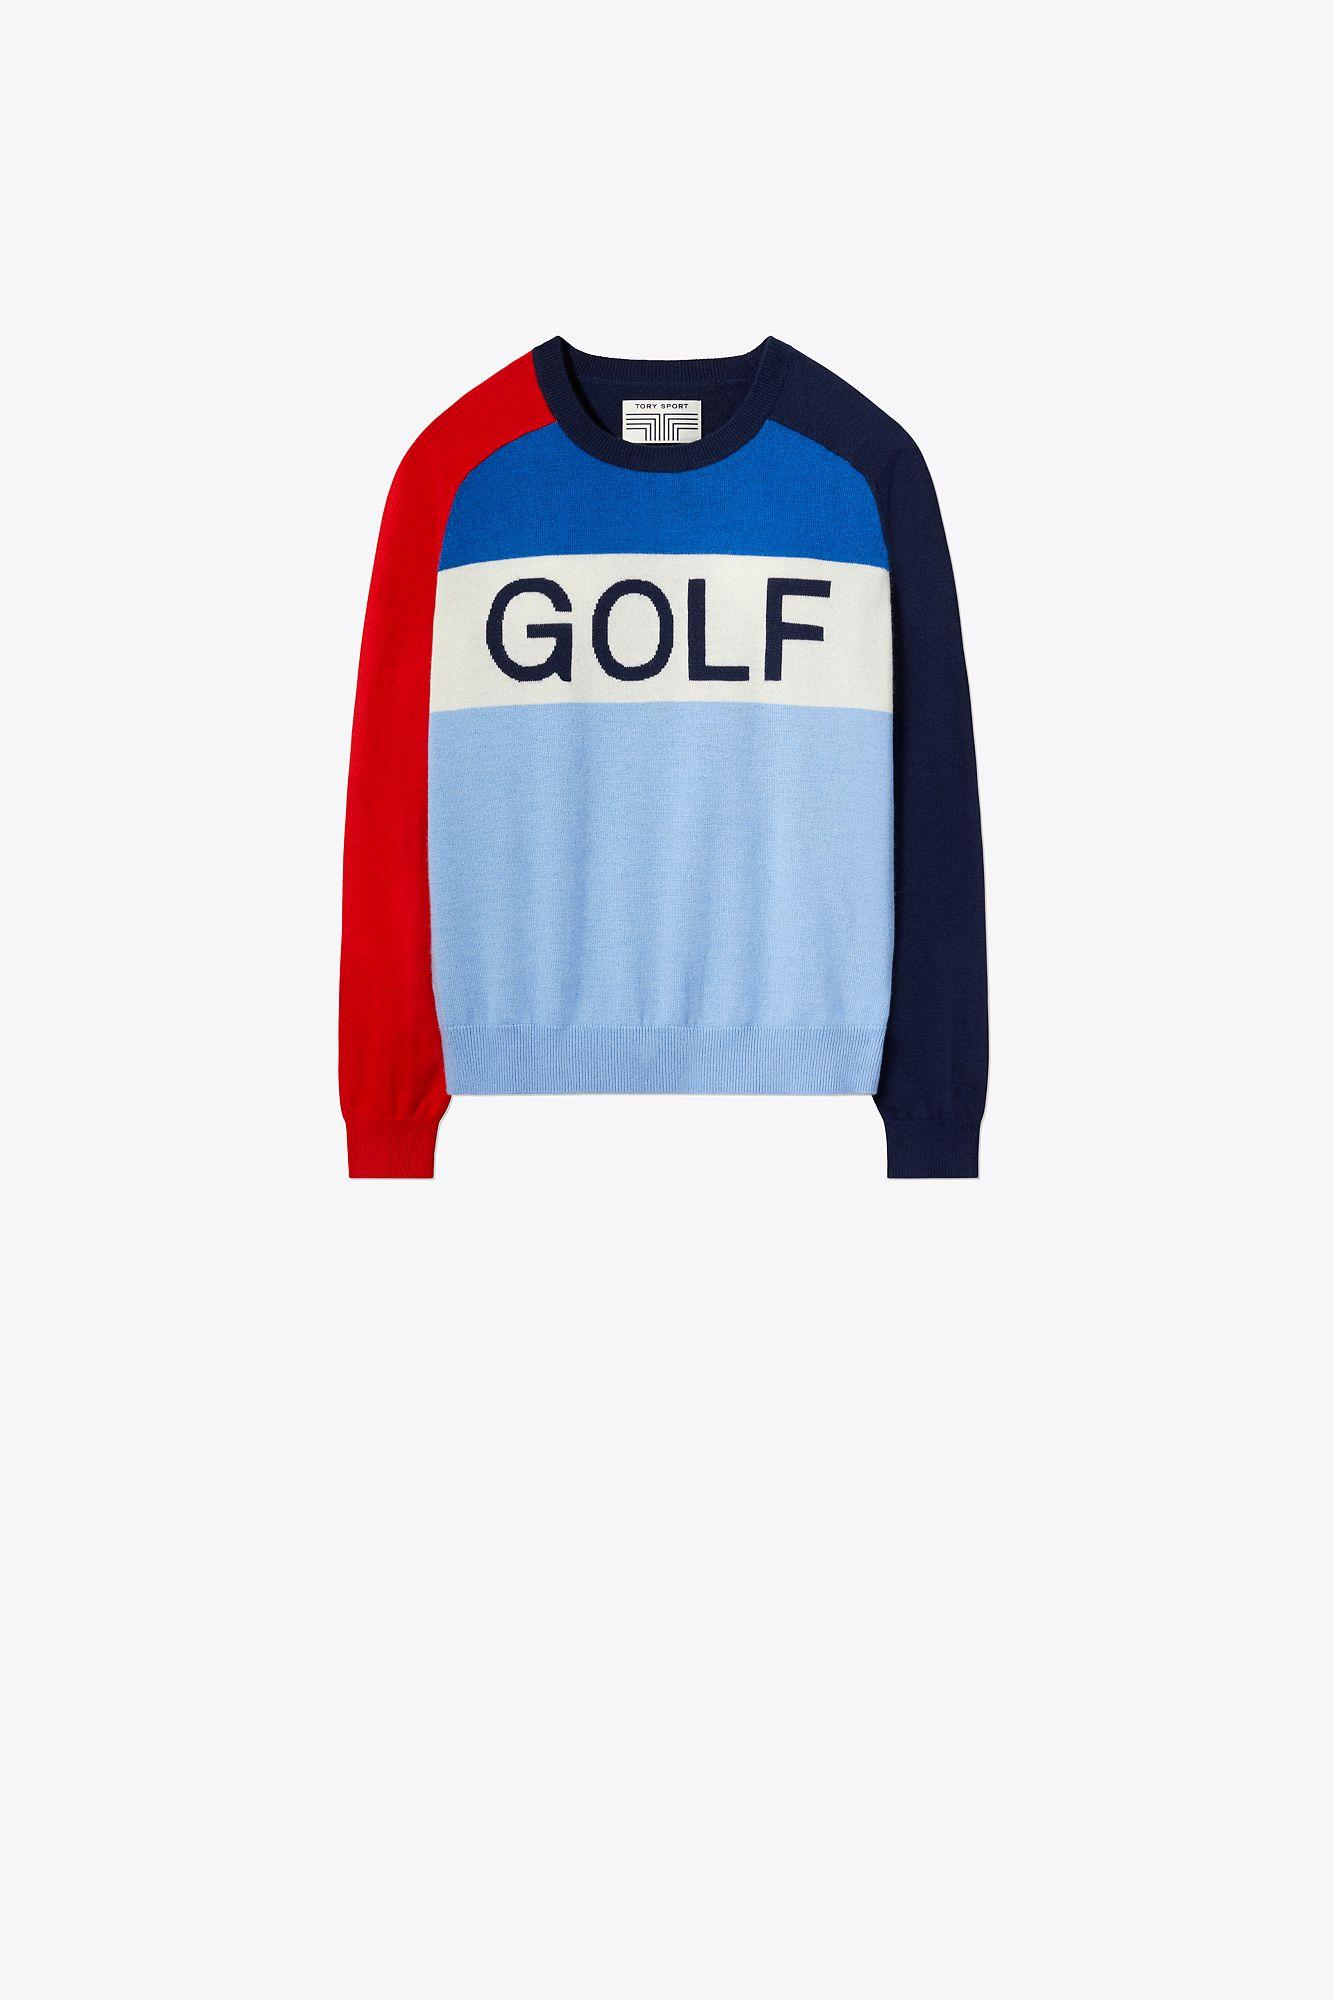 Tory Sport Cashmere Golf Sweater in Blue - Lyst